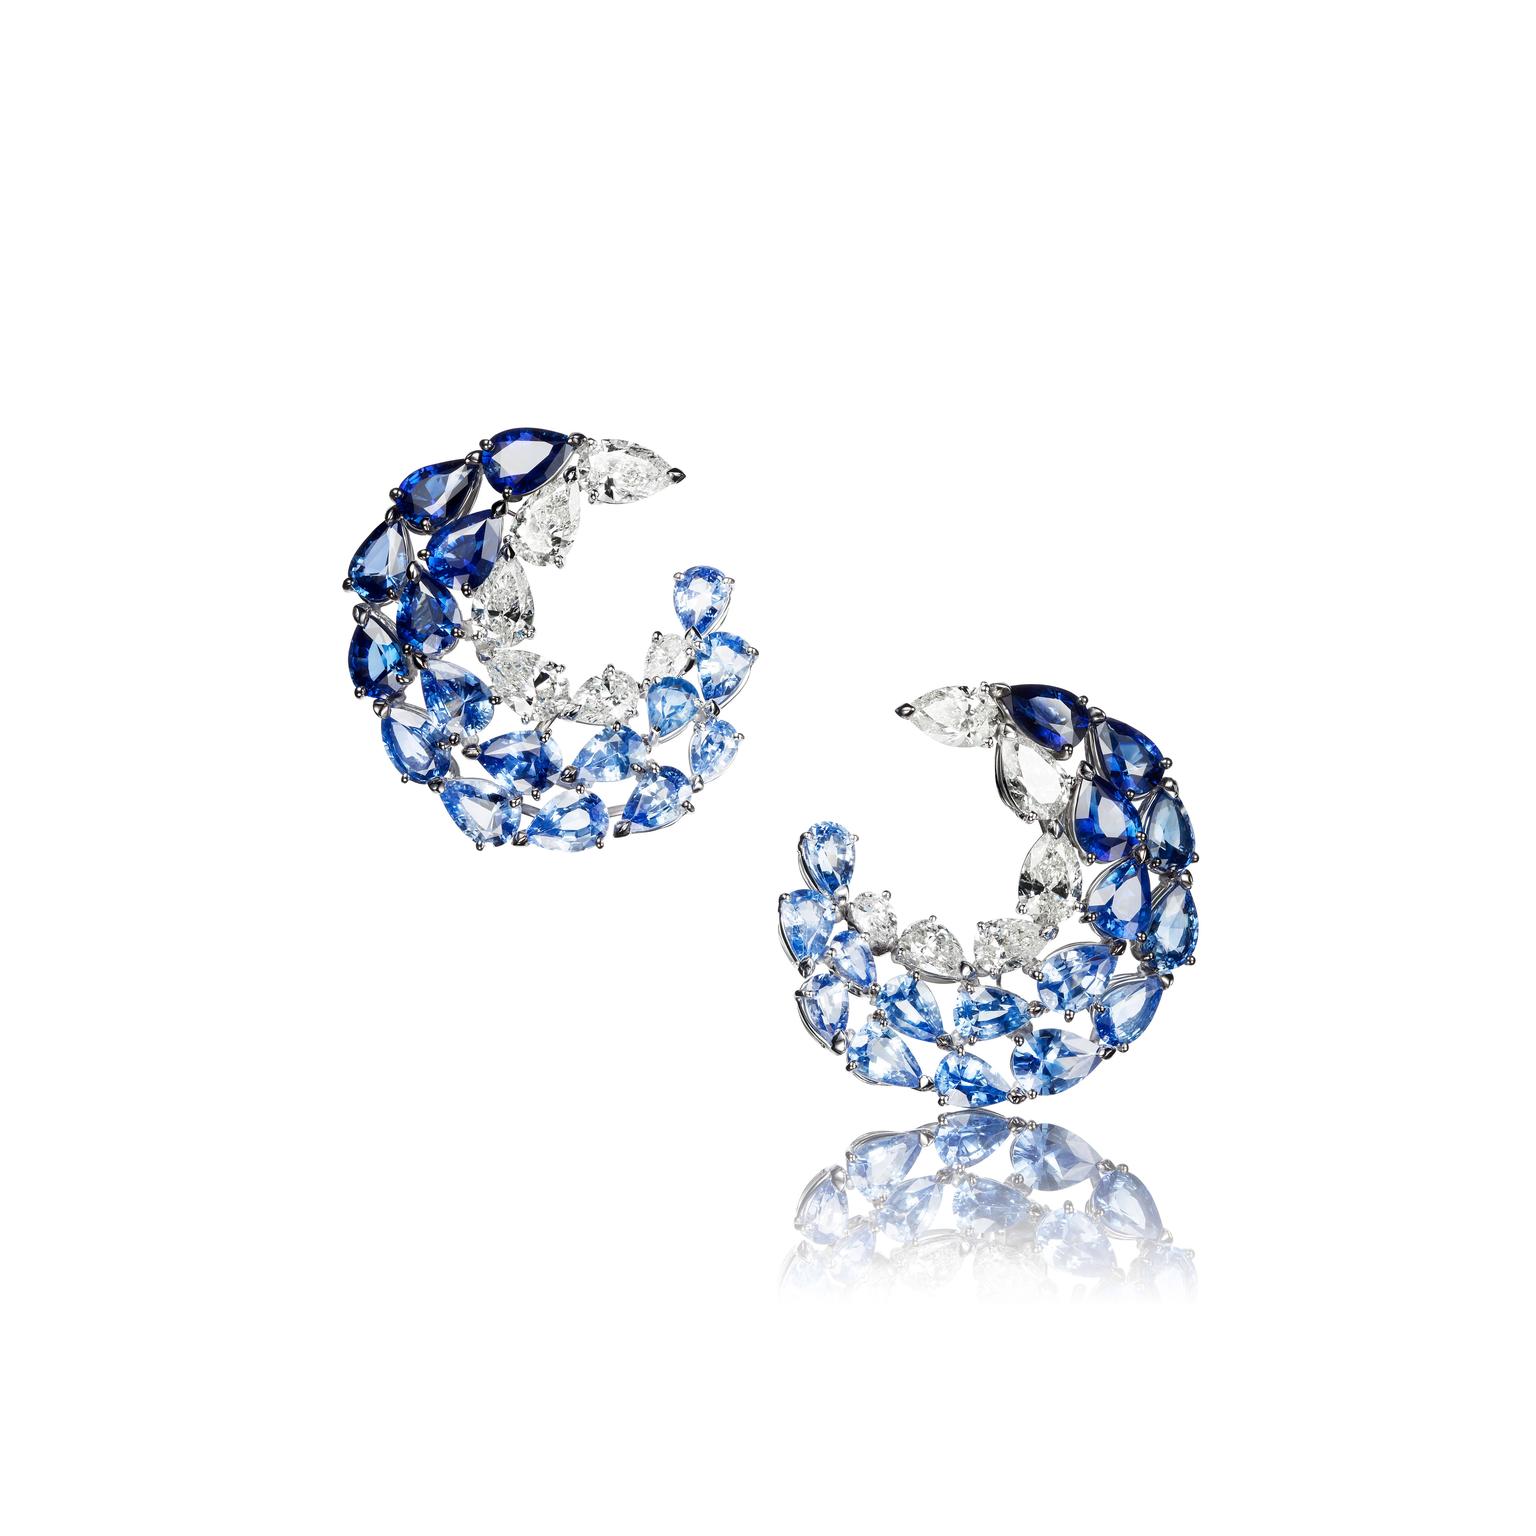 Bird of paradise: Adler's beautiful new L'Oiseau Bleu sapphire and diamond jewels